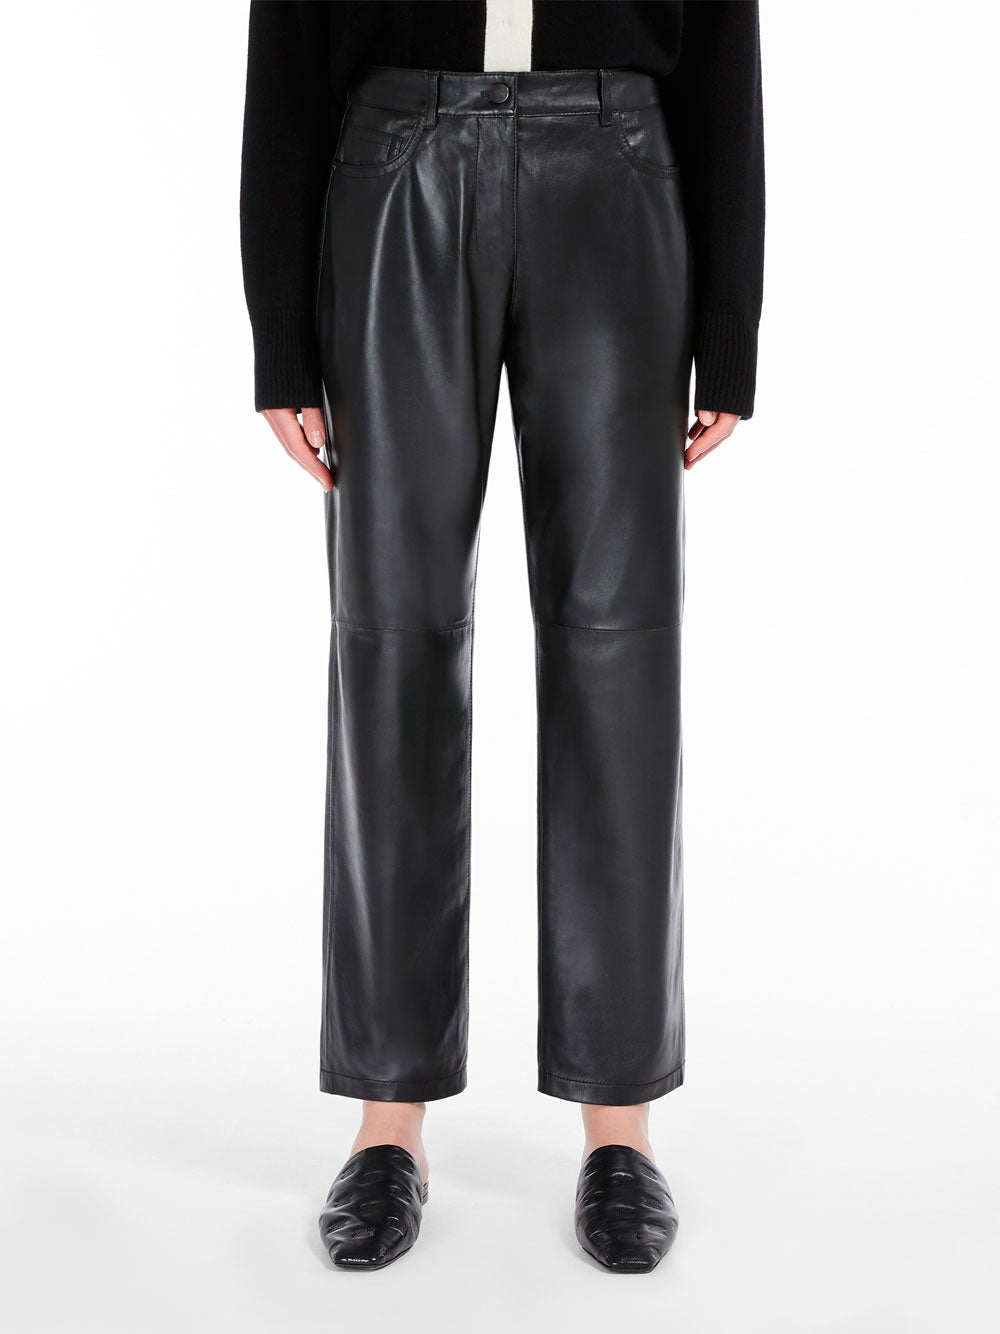 Liana pants in nappa leather